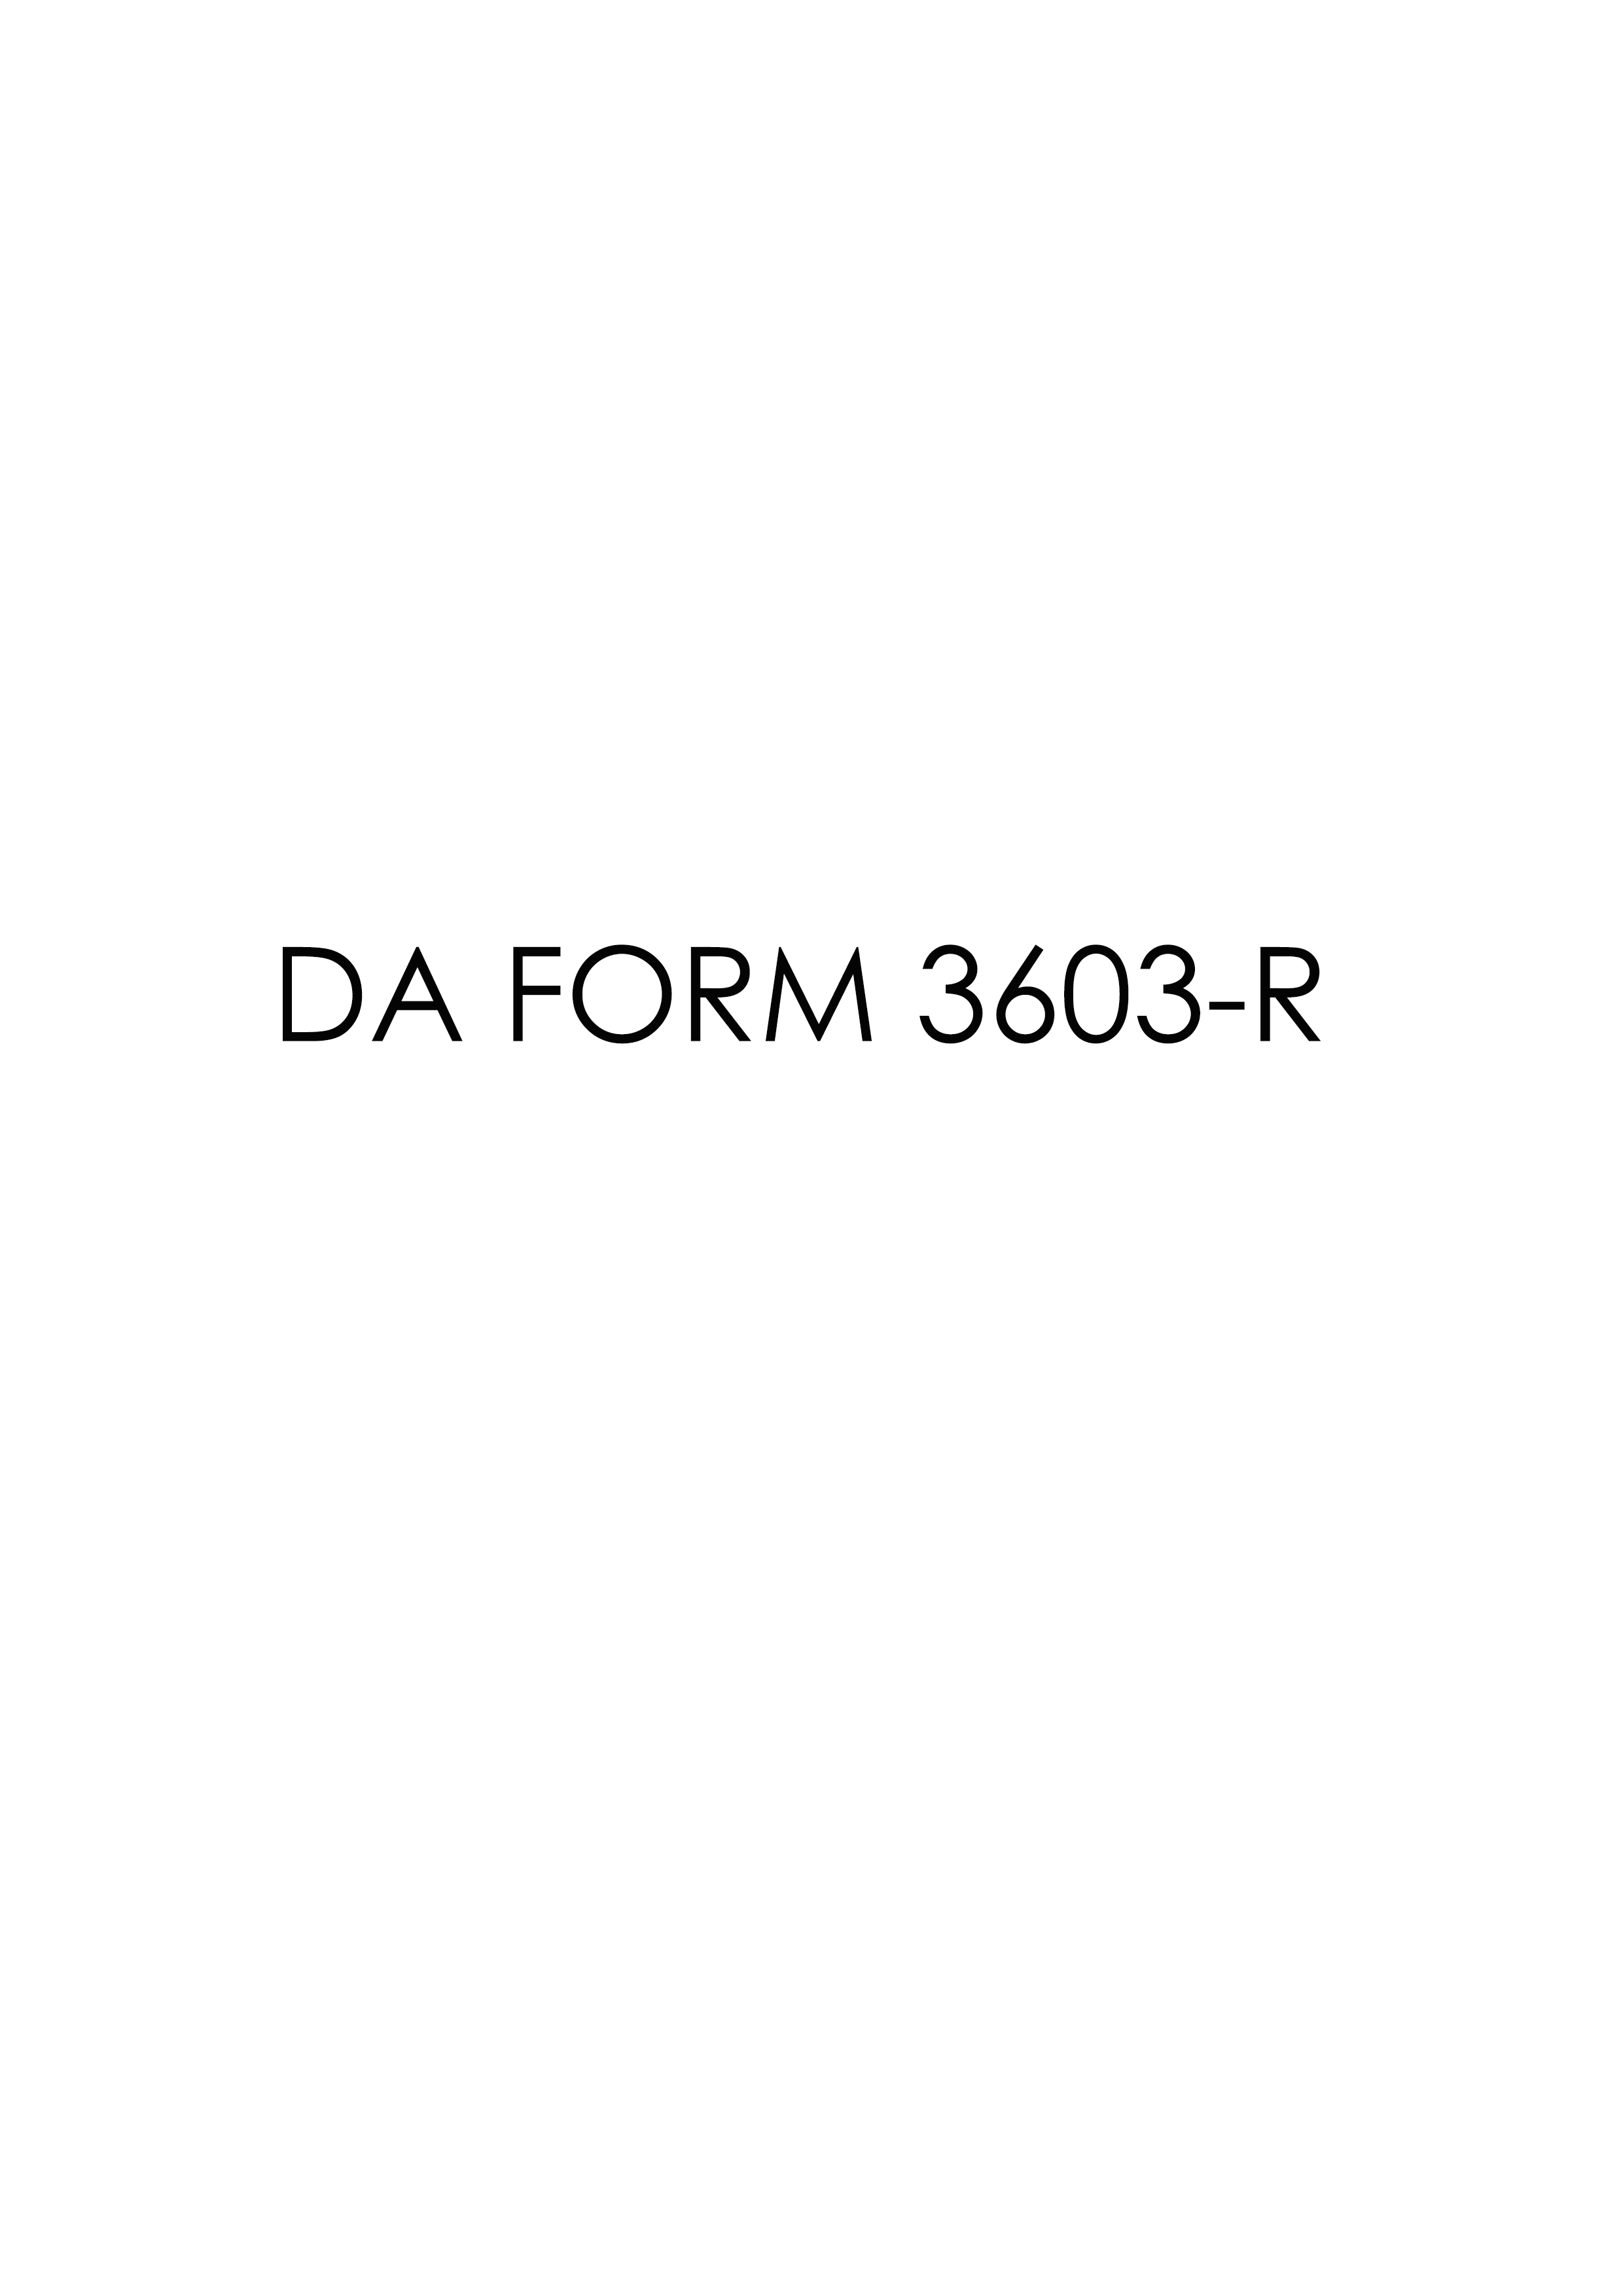 da Form 3603-R fillable